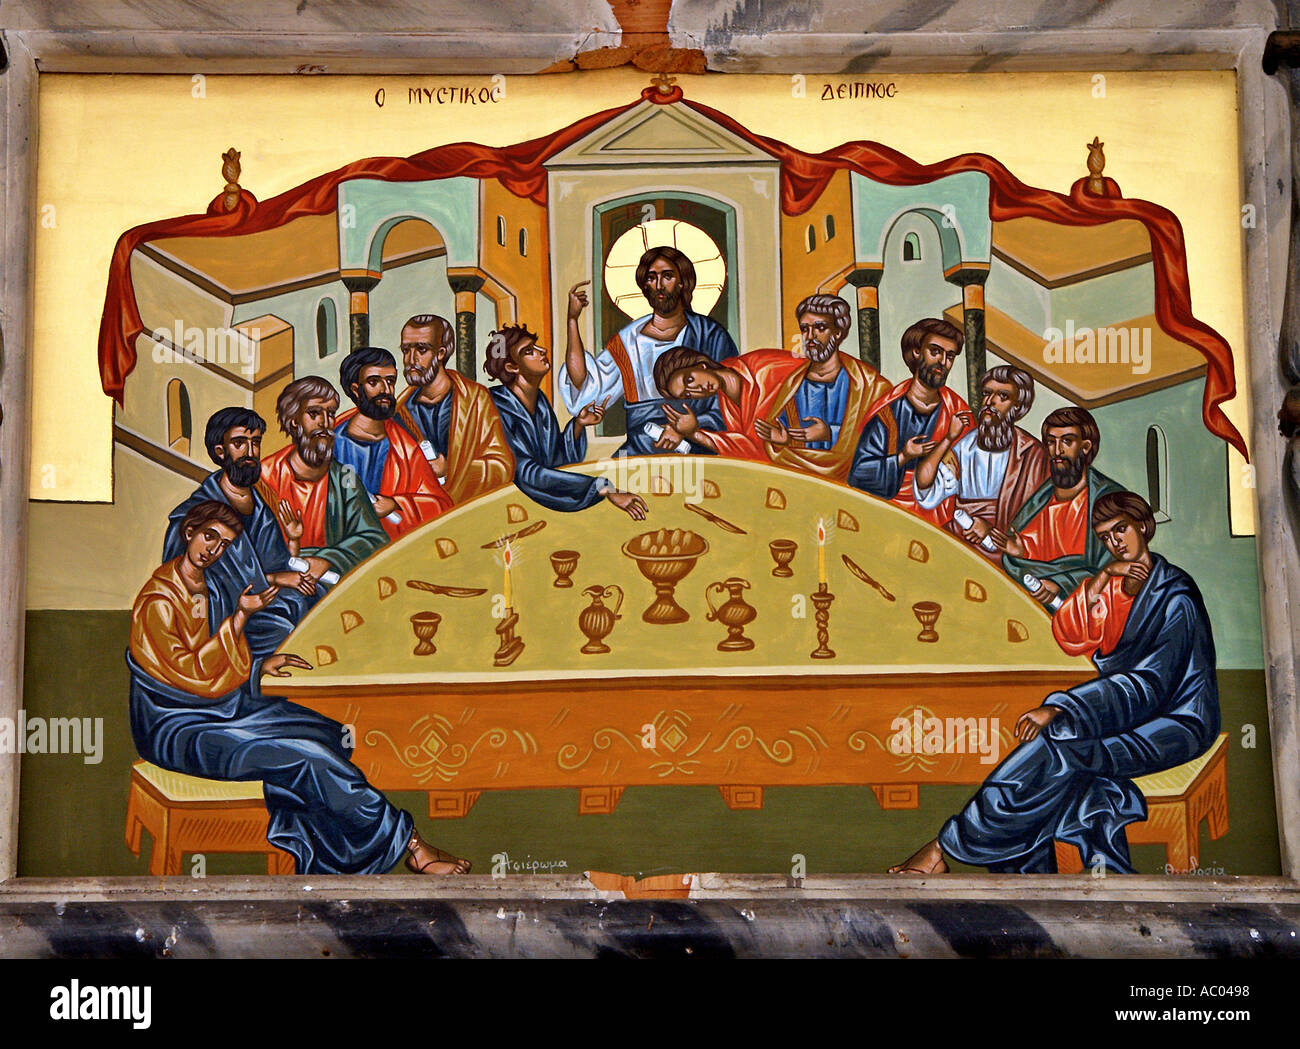 The Last Supper Mystic Supper Jesus Christ and 12 Apostles illustration old church Crete Krete island Greece Stock Photo